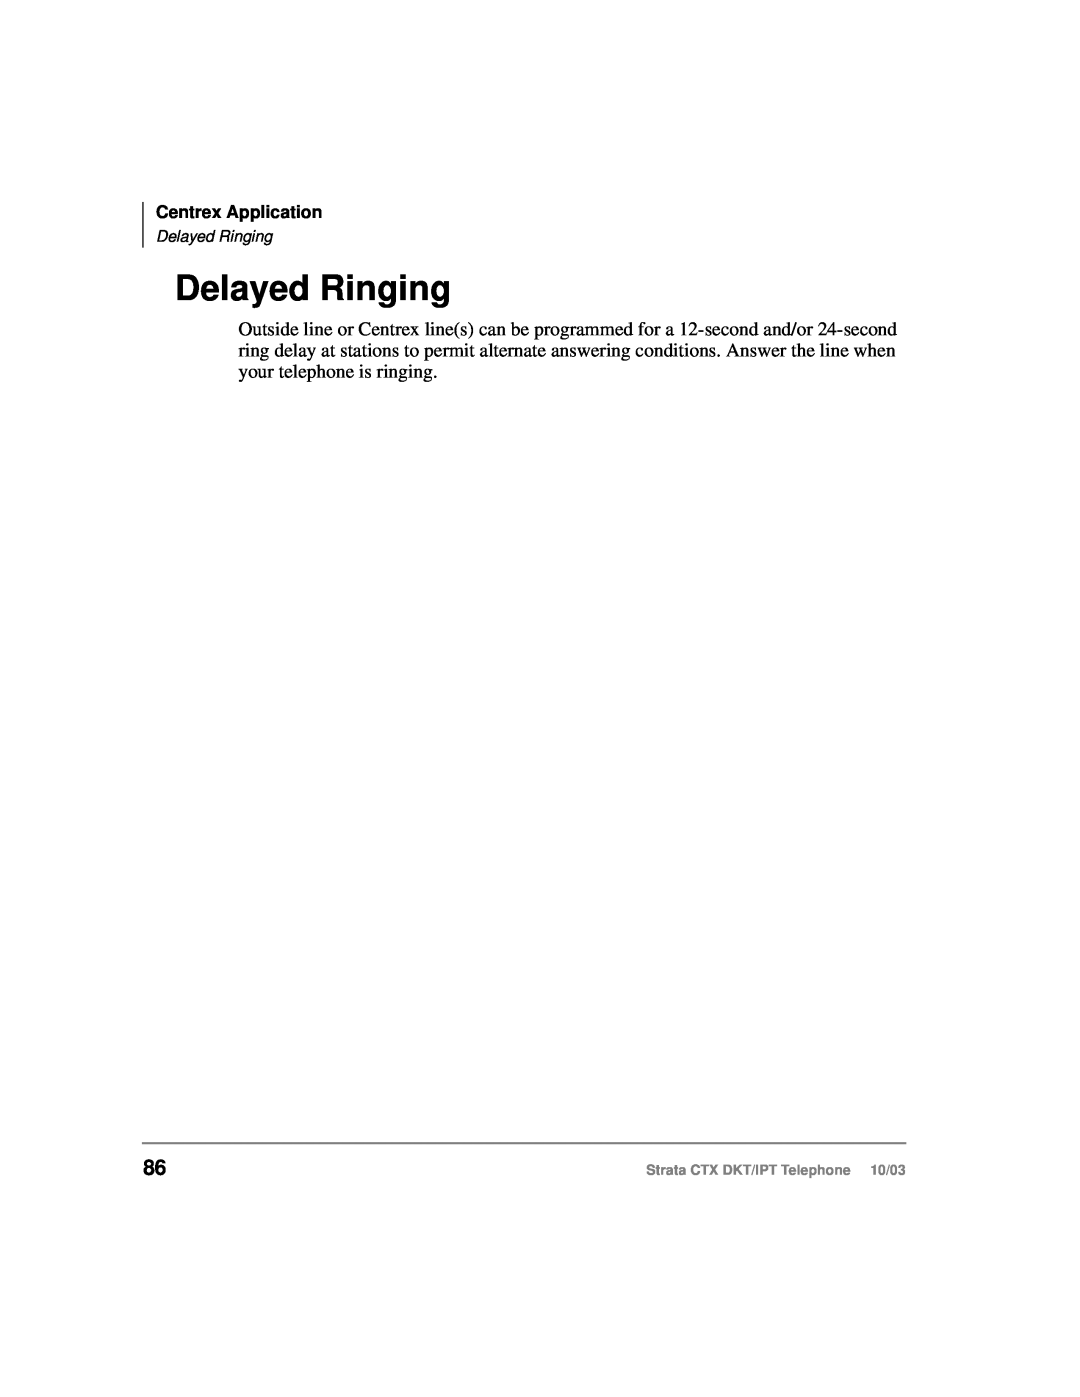 Toshiba manual Delayed Ringing, Centrex Application, Strata CTX DKT/IPT Telephone 10/03 